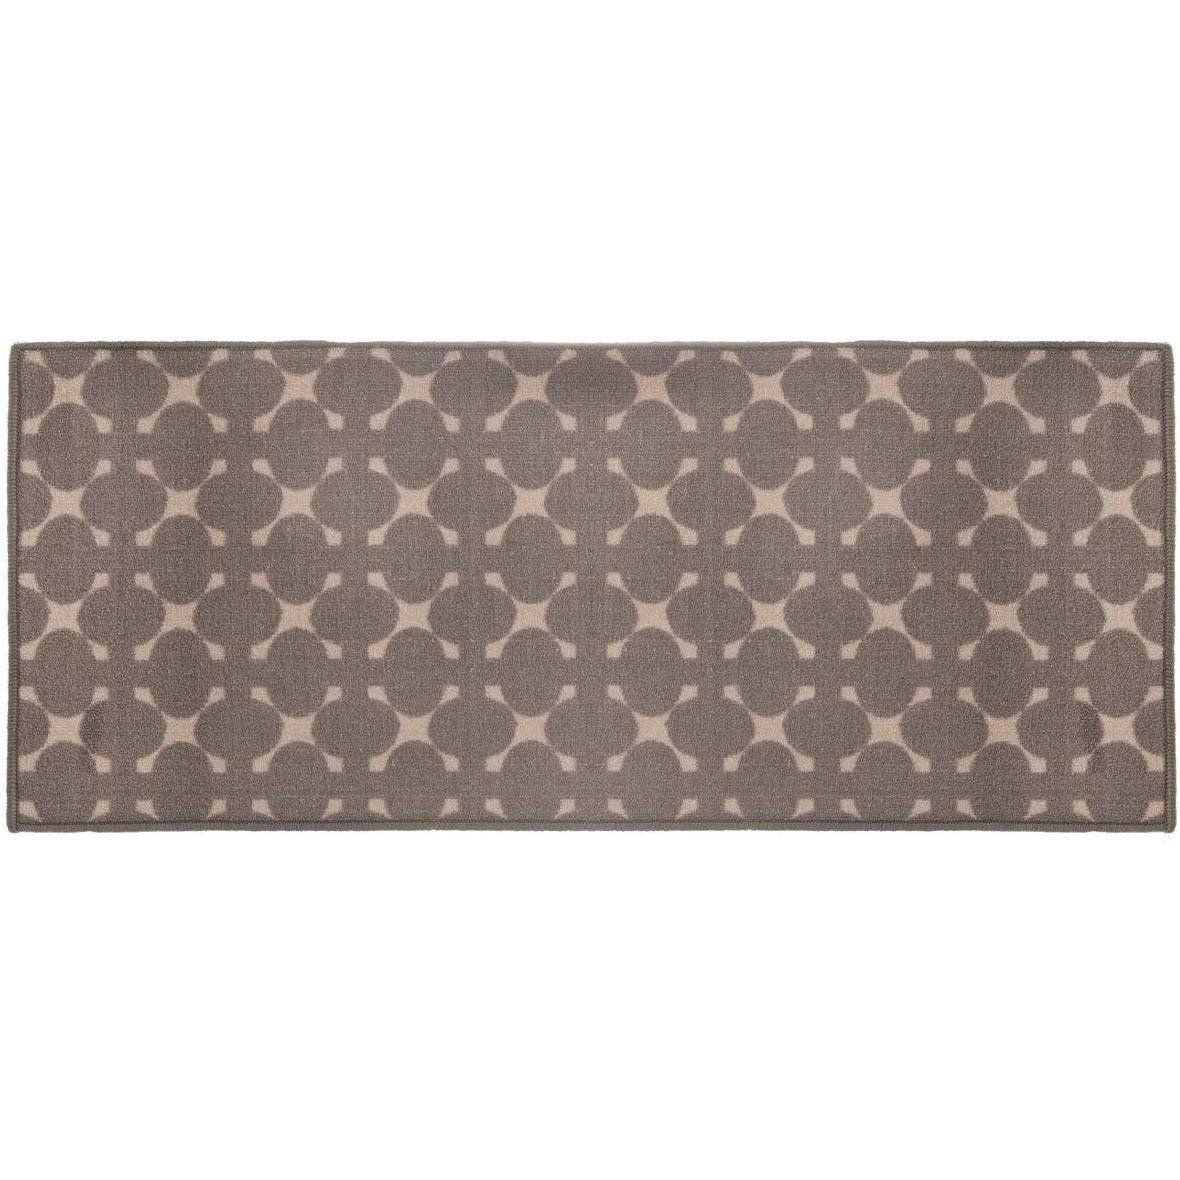 Atmosphera GEO chodba dekorativní koberec, 50 x 120 cm, hnědá - EMAKO.CZ s.r.o.